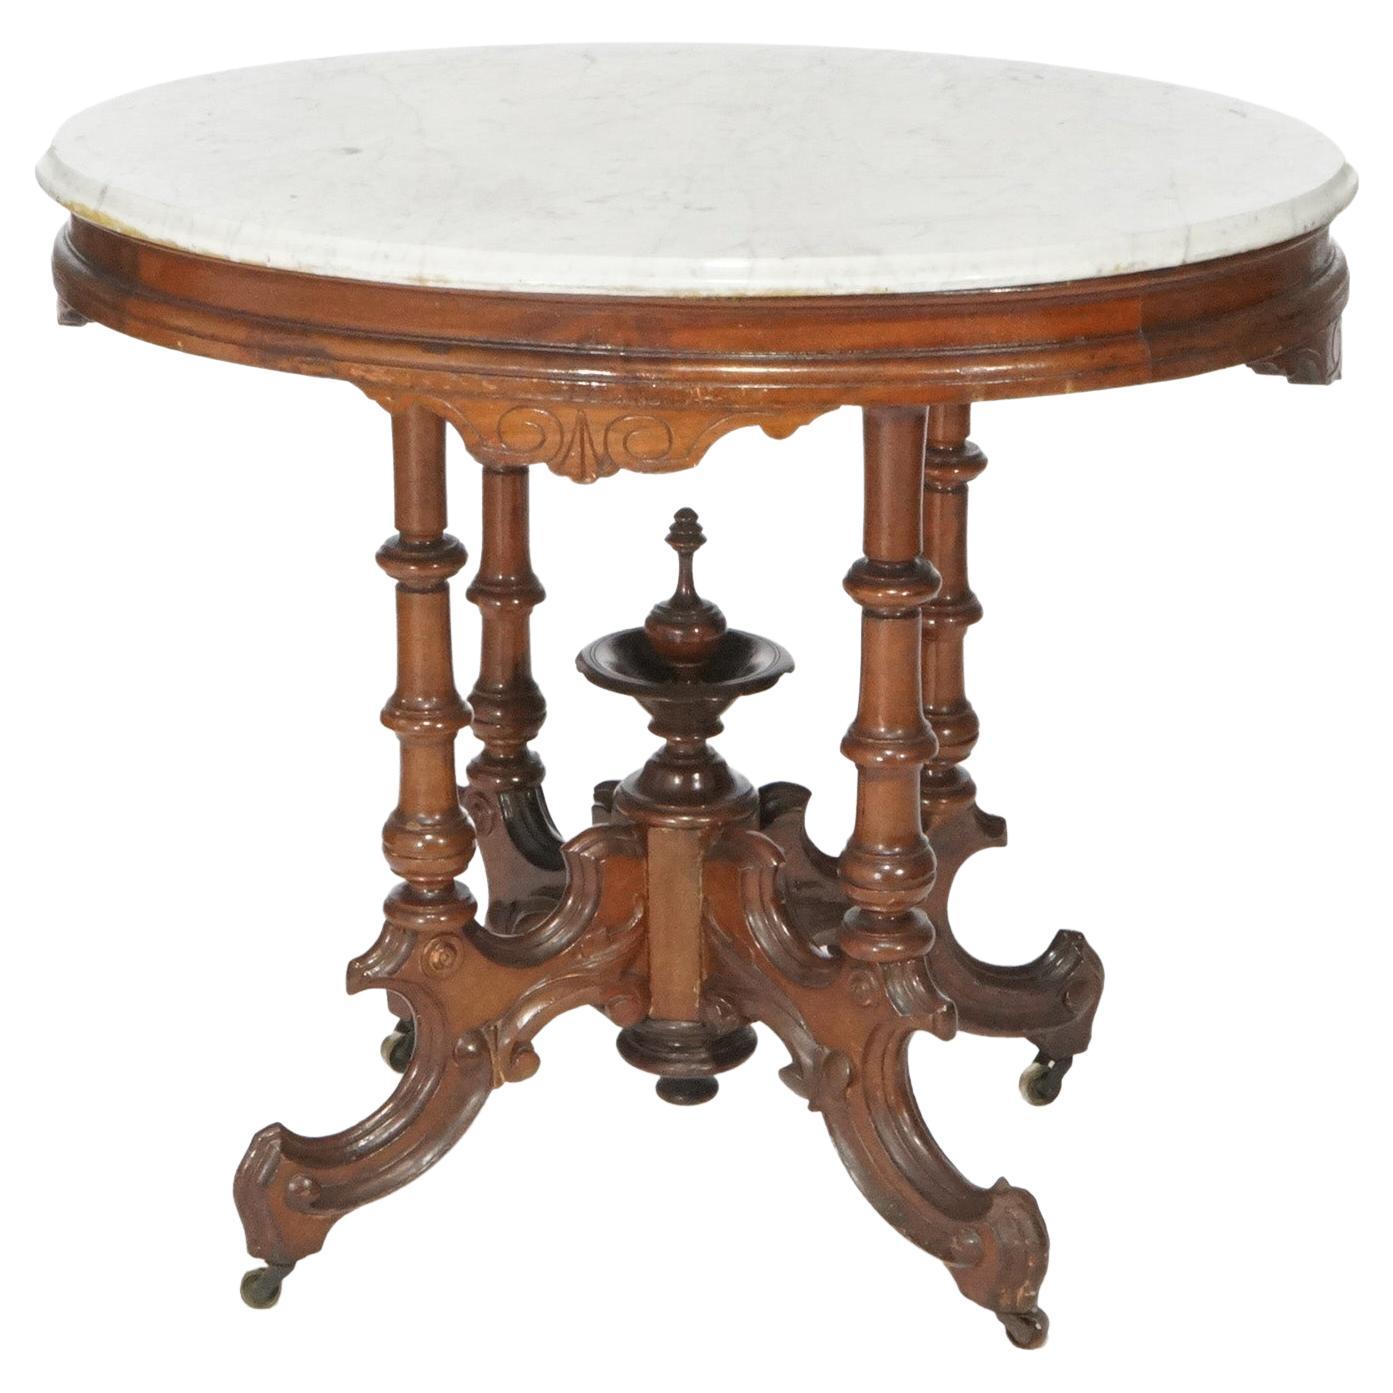 Antique Renaissance Revival Walnut Oval Marble Top Parlor Table, circa 1890 For Sale